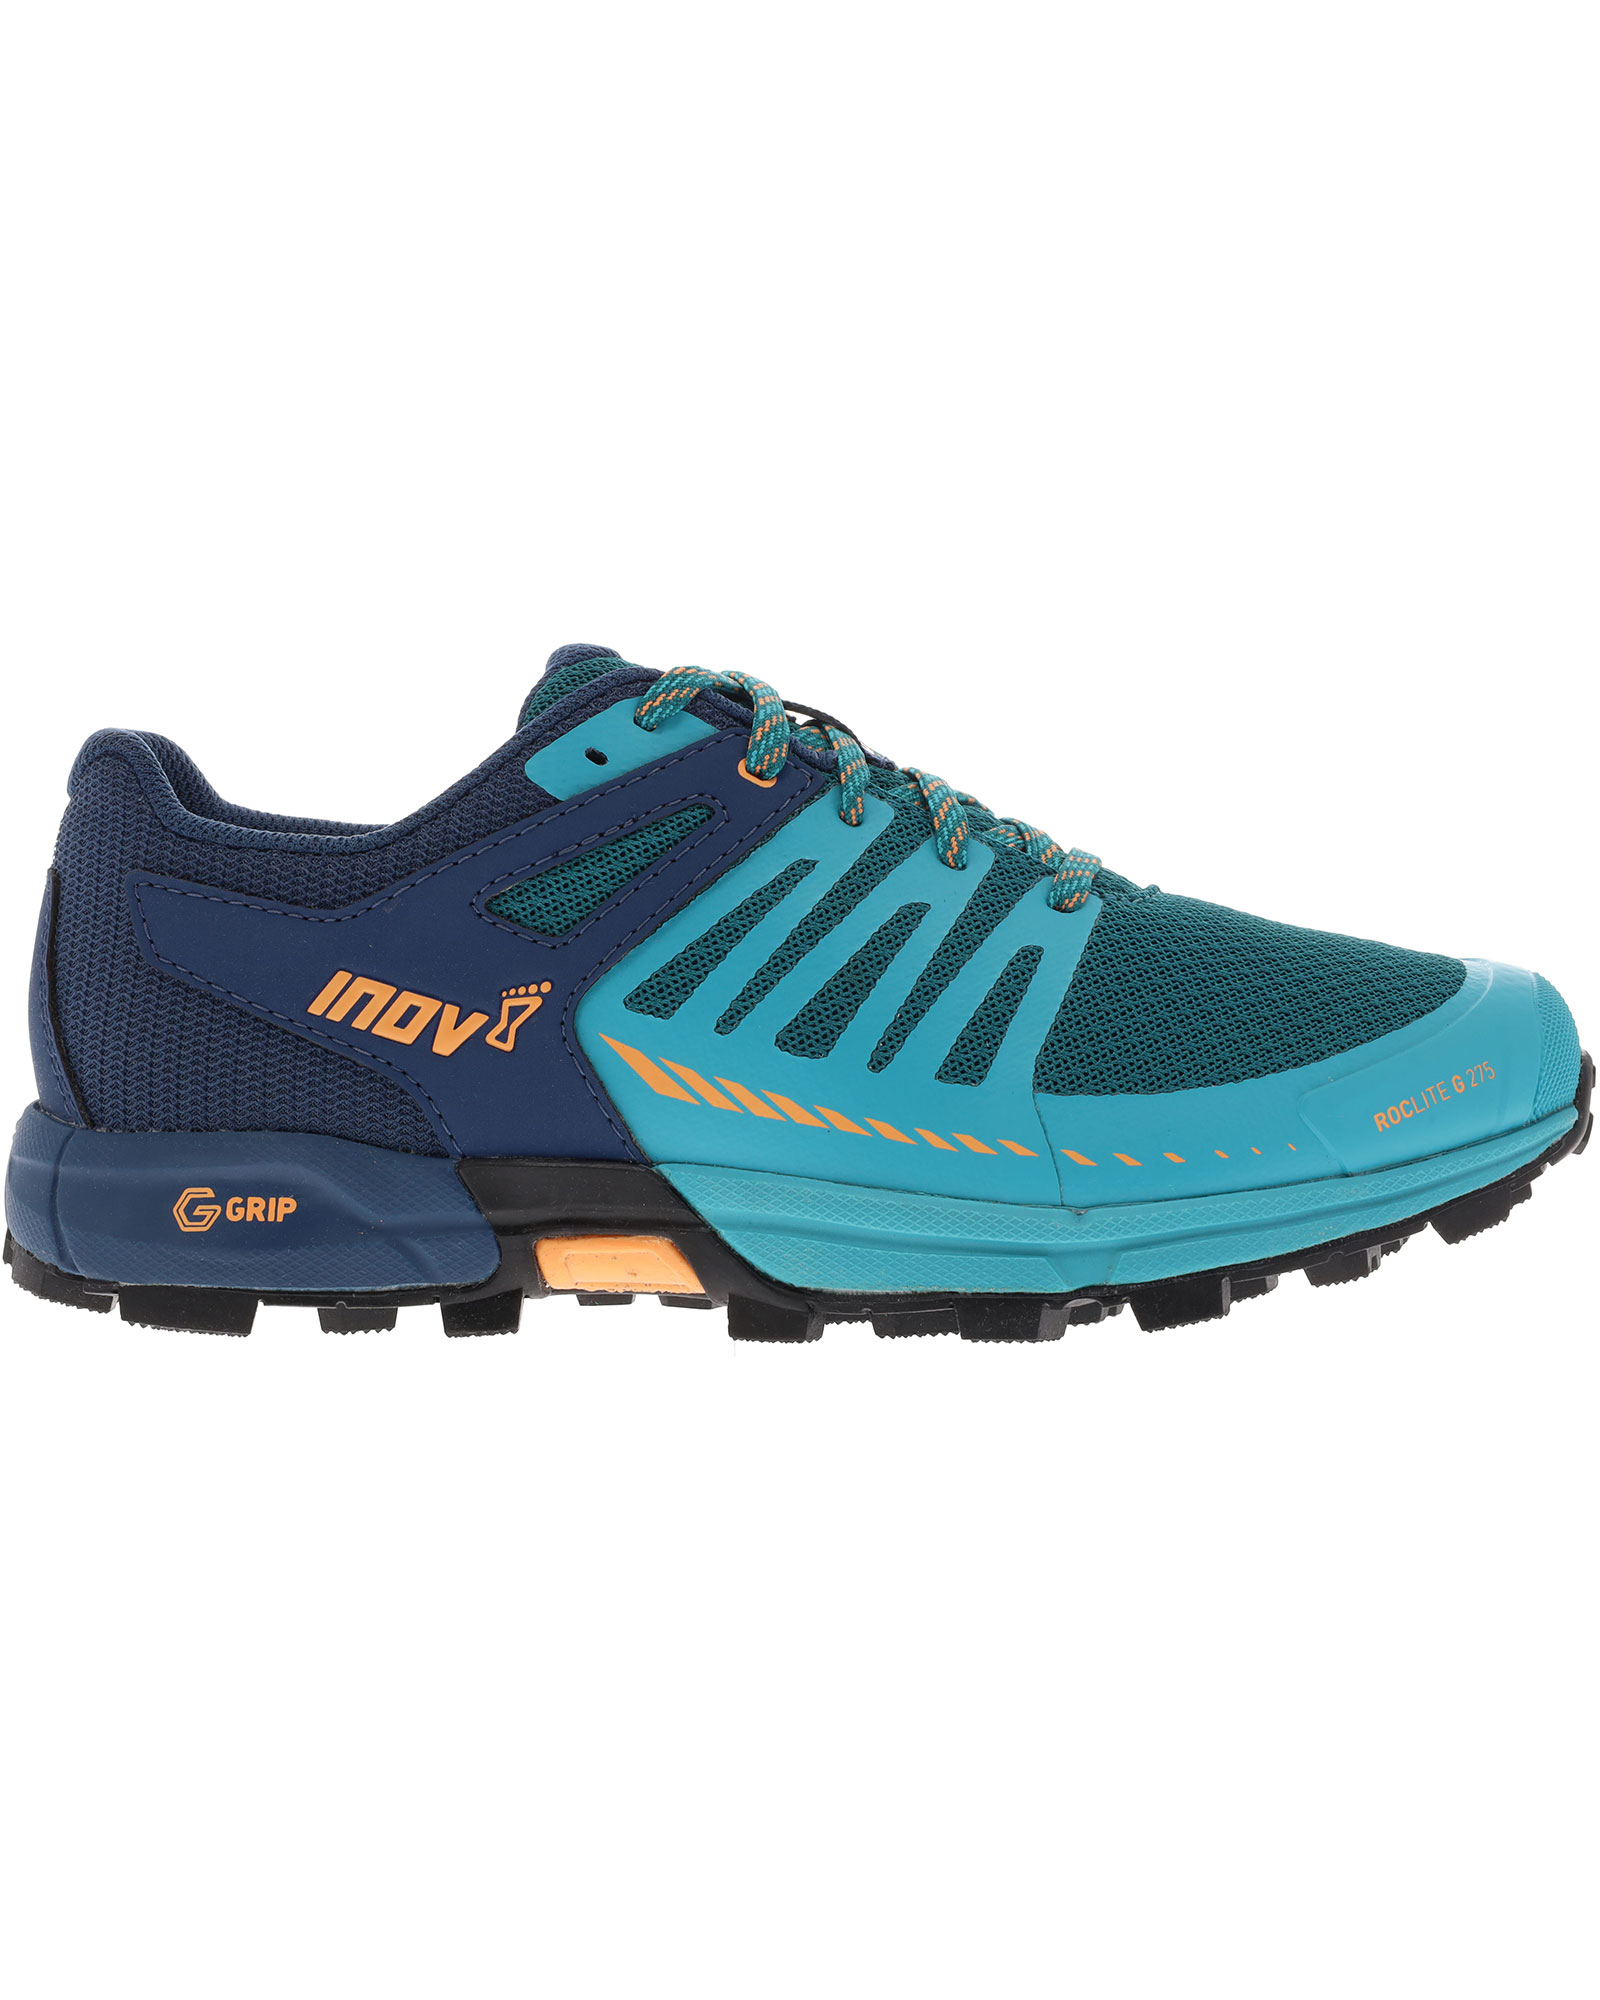 Inov 8 Roclite G 275 V2 Women’s Trail Shoes - Teal/Navy/Nectar UK 8